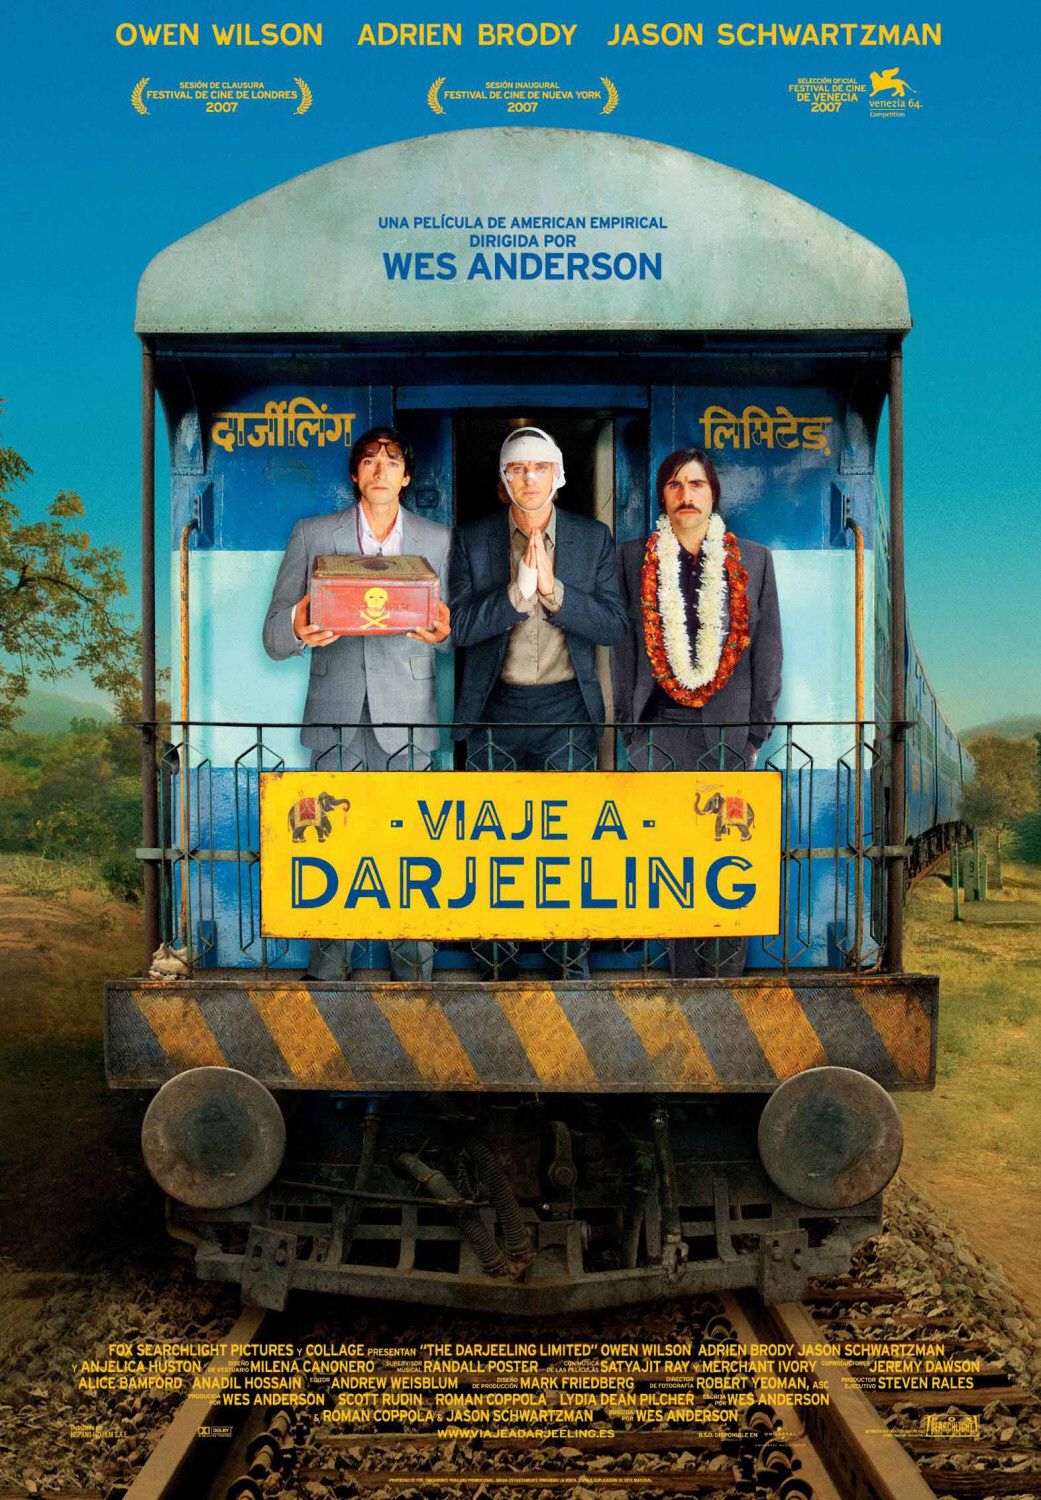 The Darjeeling Limited - The Filmink Project on Behance